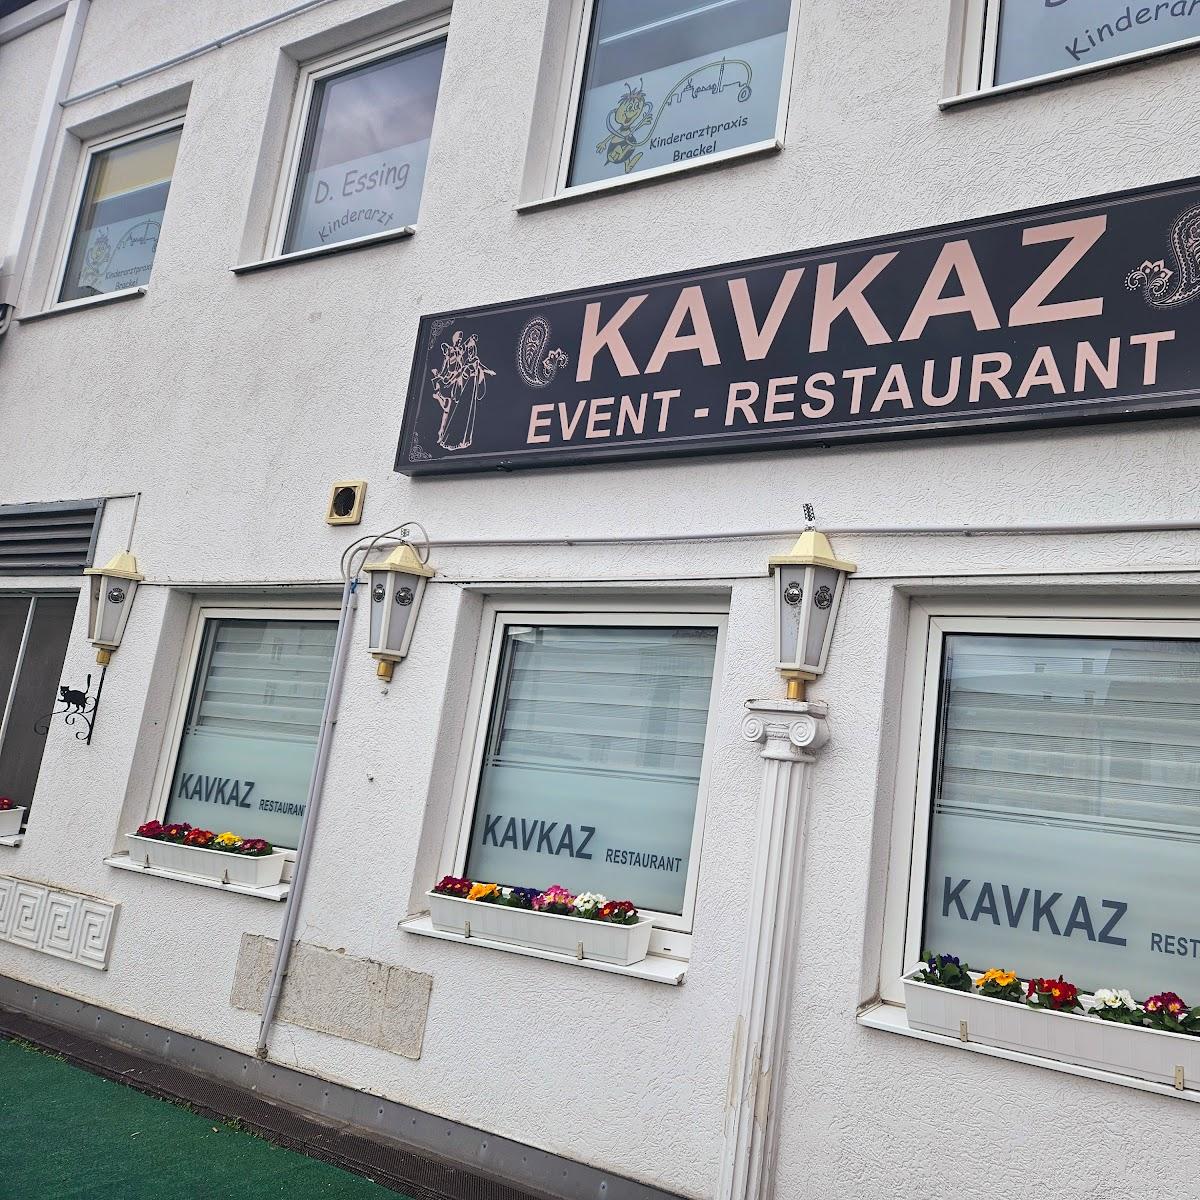 Restaurant "Restaurant Kavkaz" in Dortmund